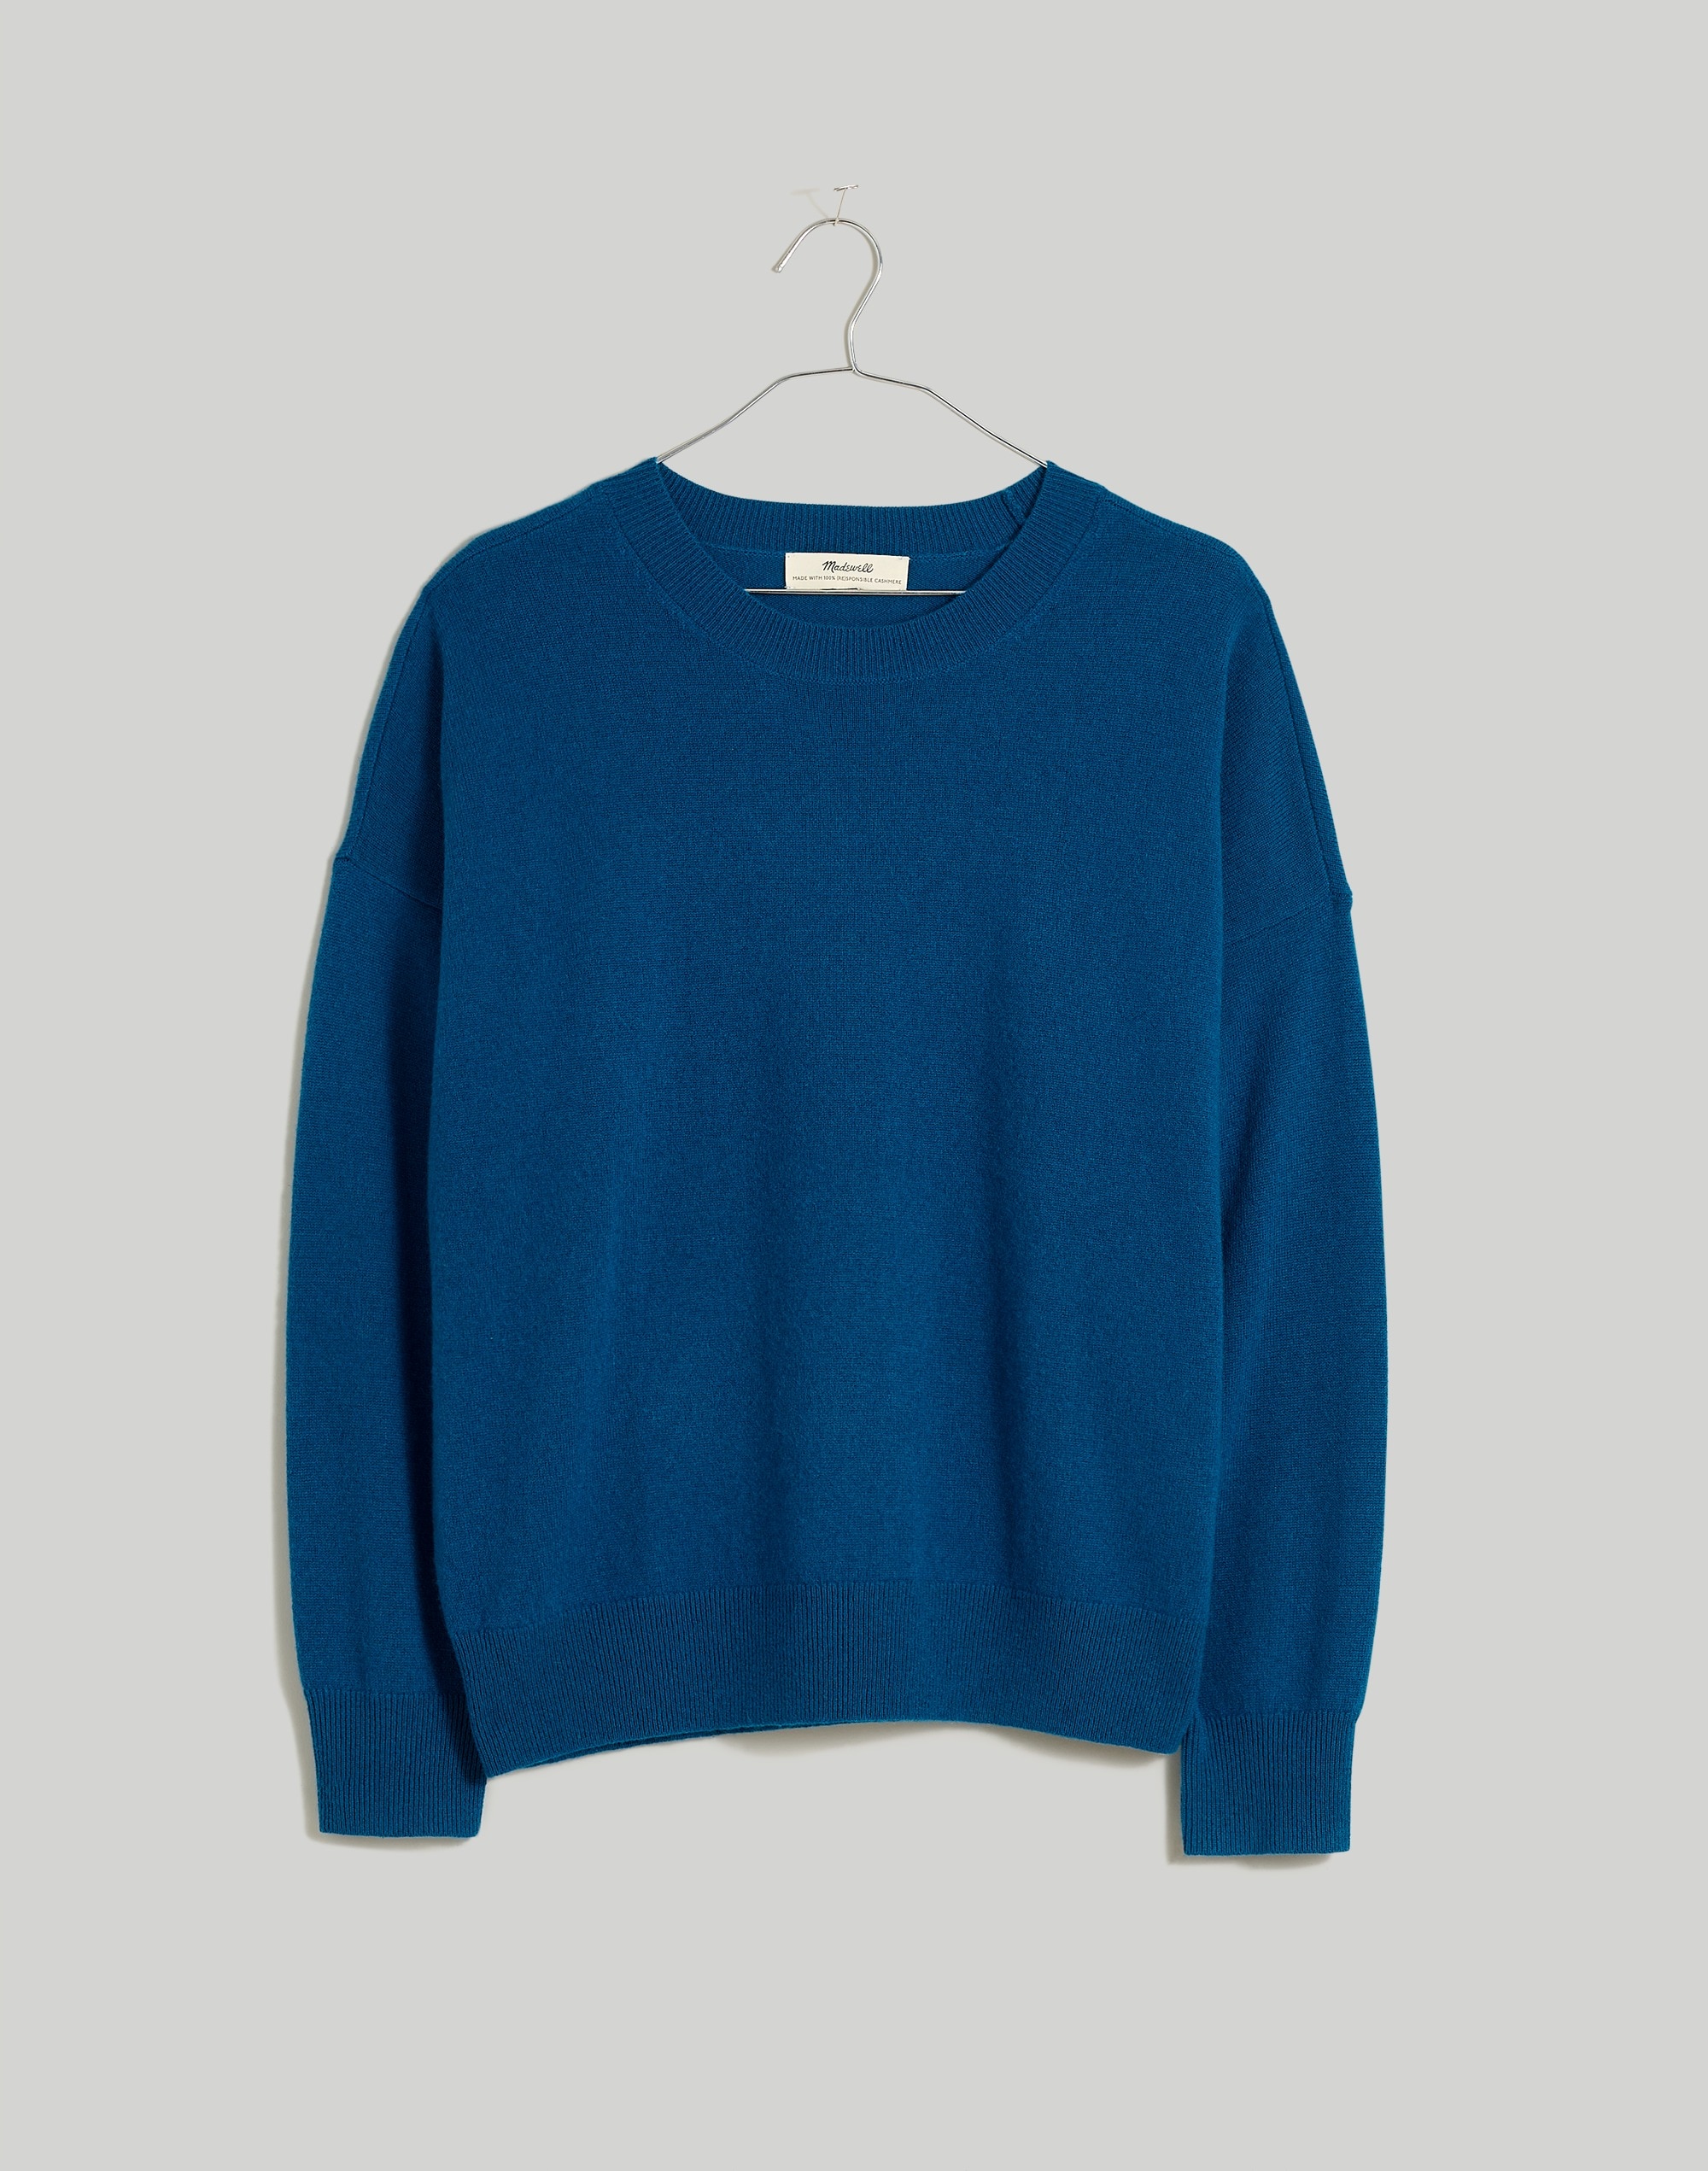 Madewell Women's (Re)sponsible Cashmere Turtleneck Sweater in Heather Pistachio - Size XXL